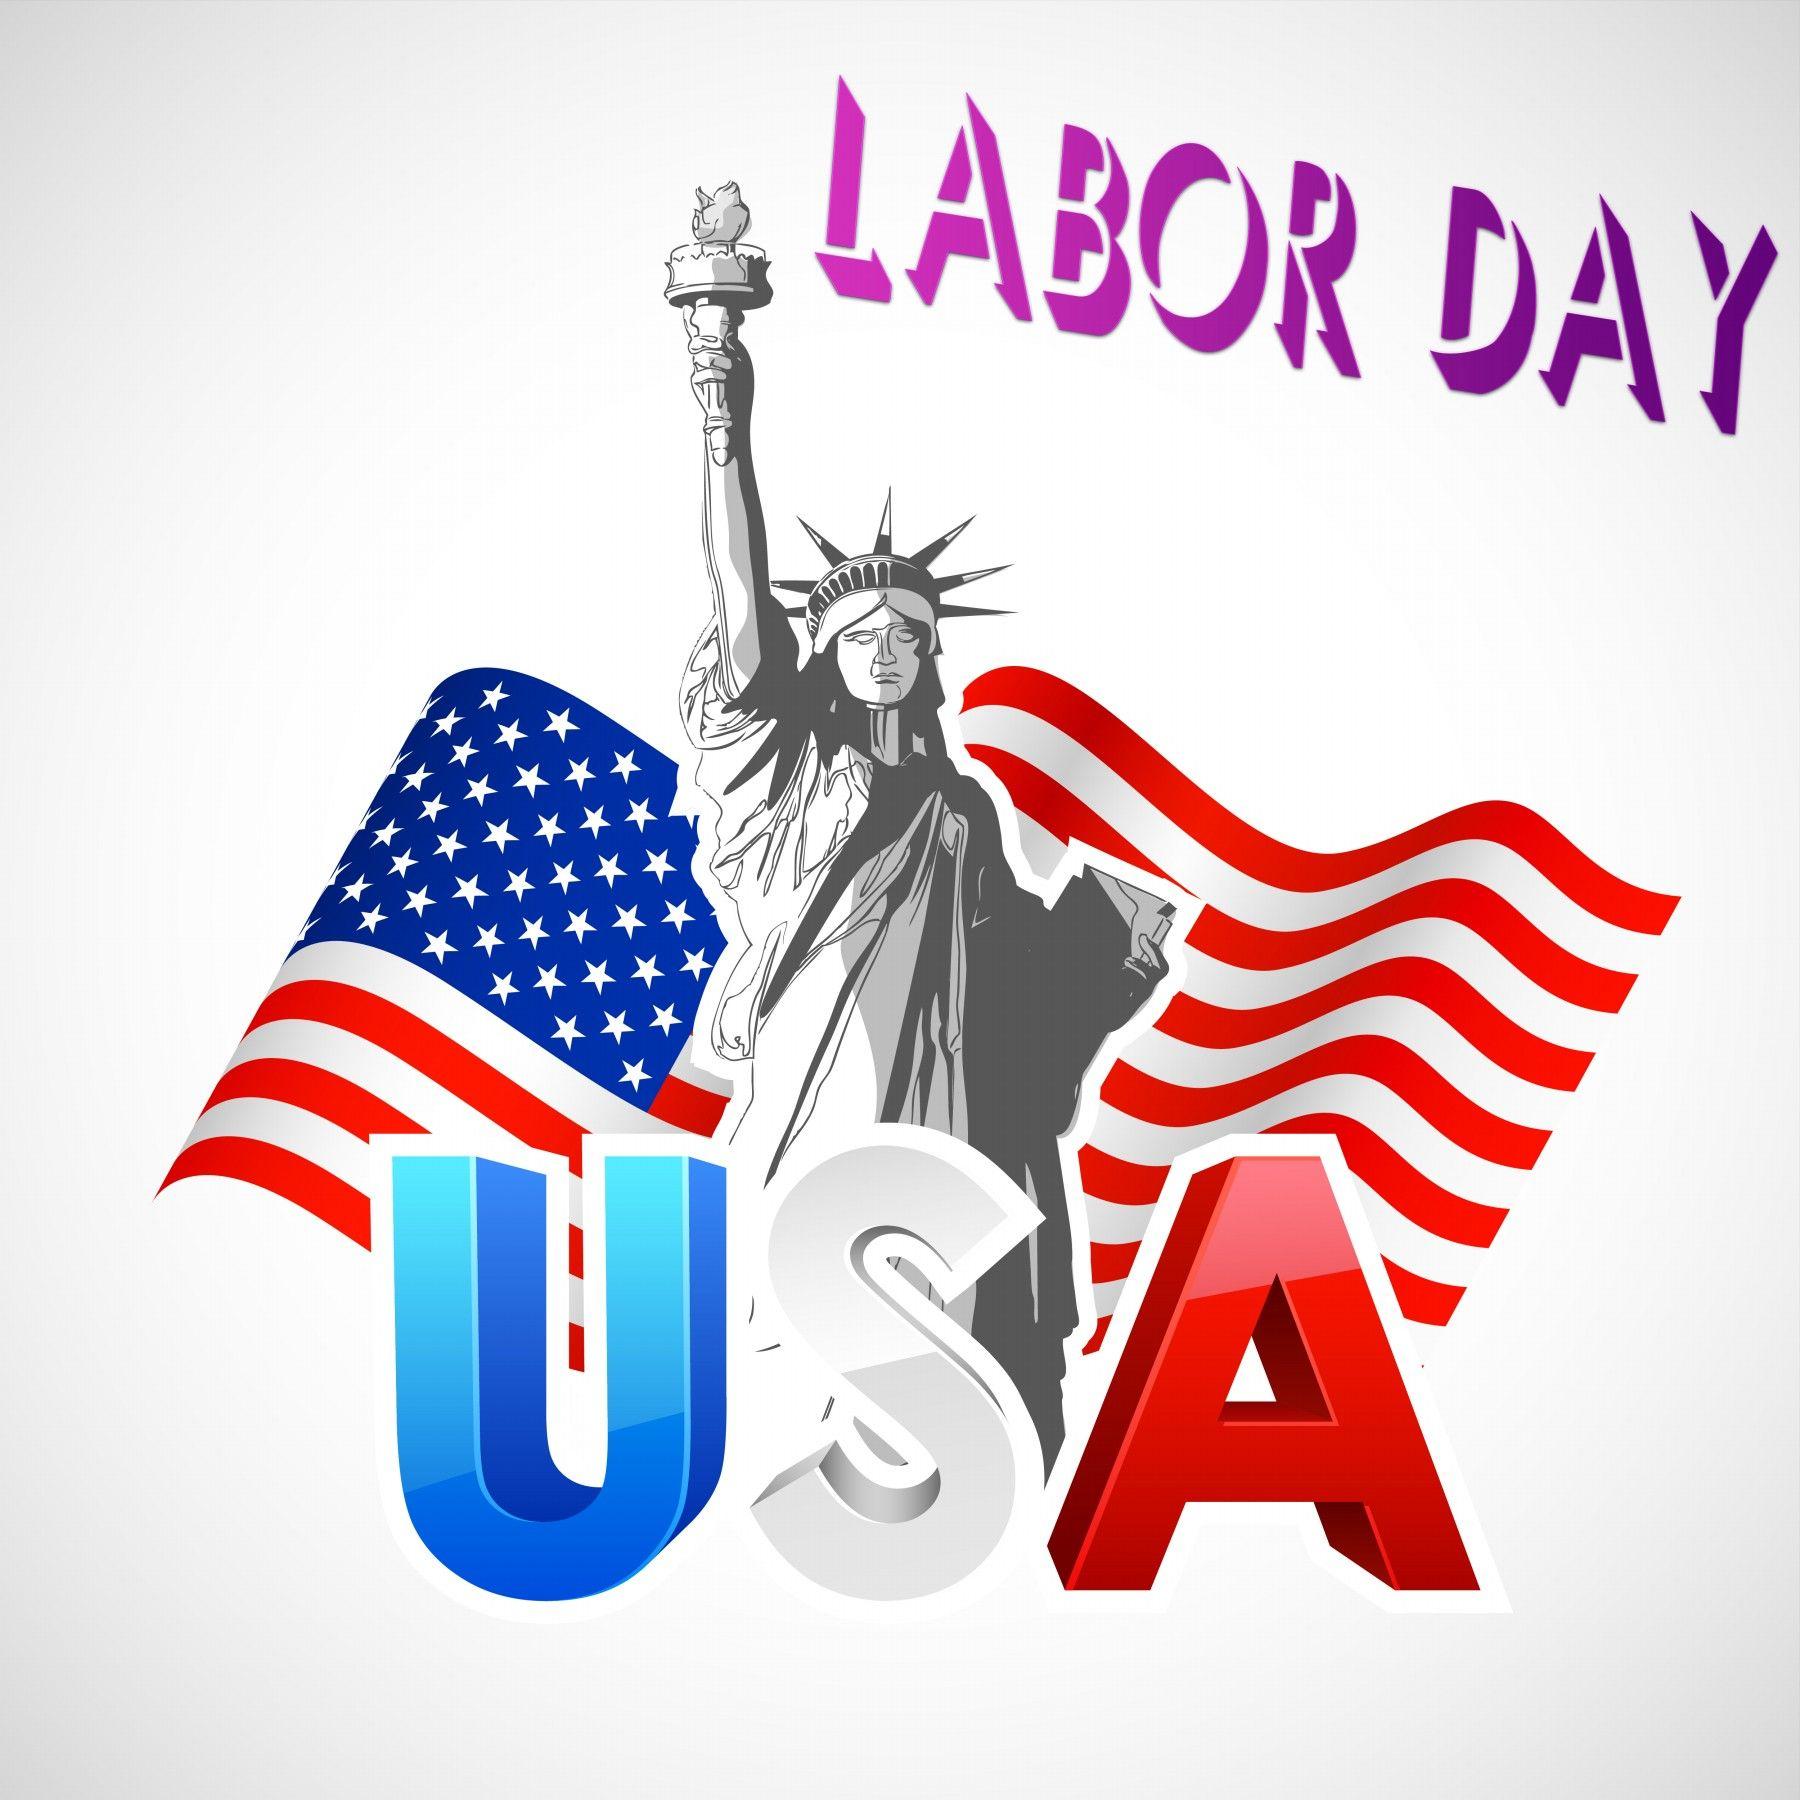 Happy Labor Day 2014